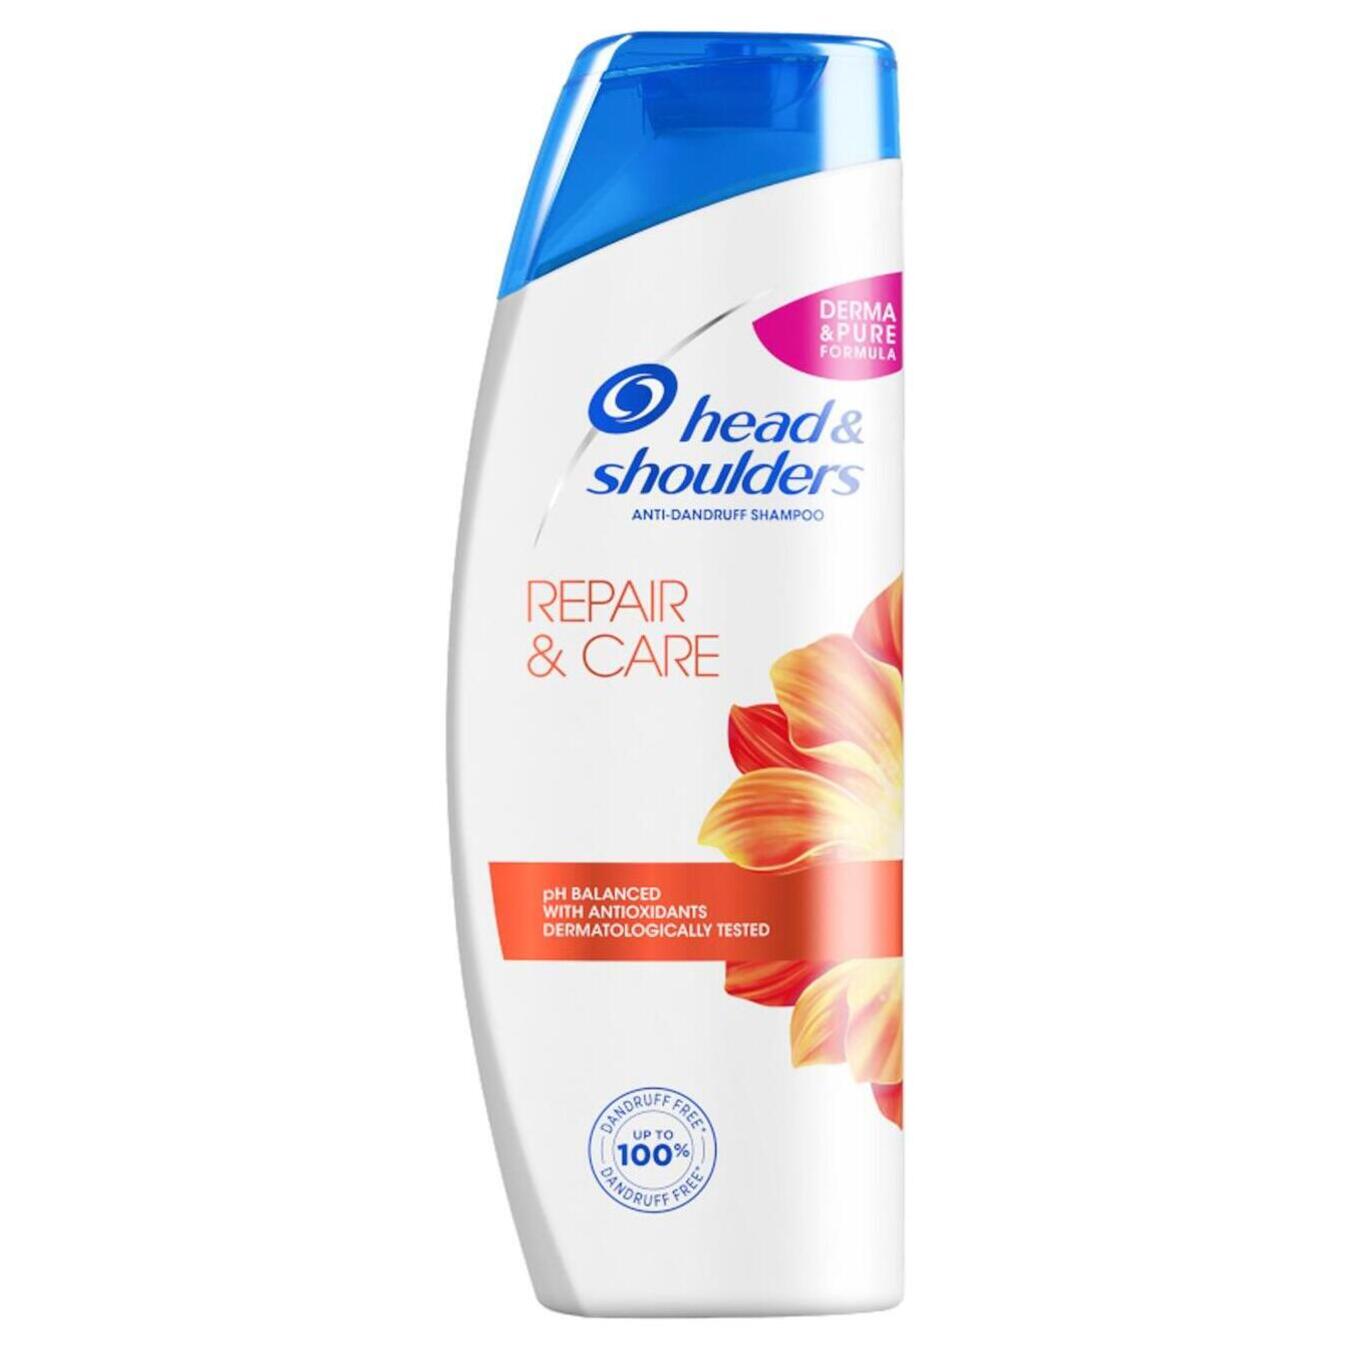 H&S anti-dandruff shampoo recovery and care 400ml